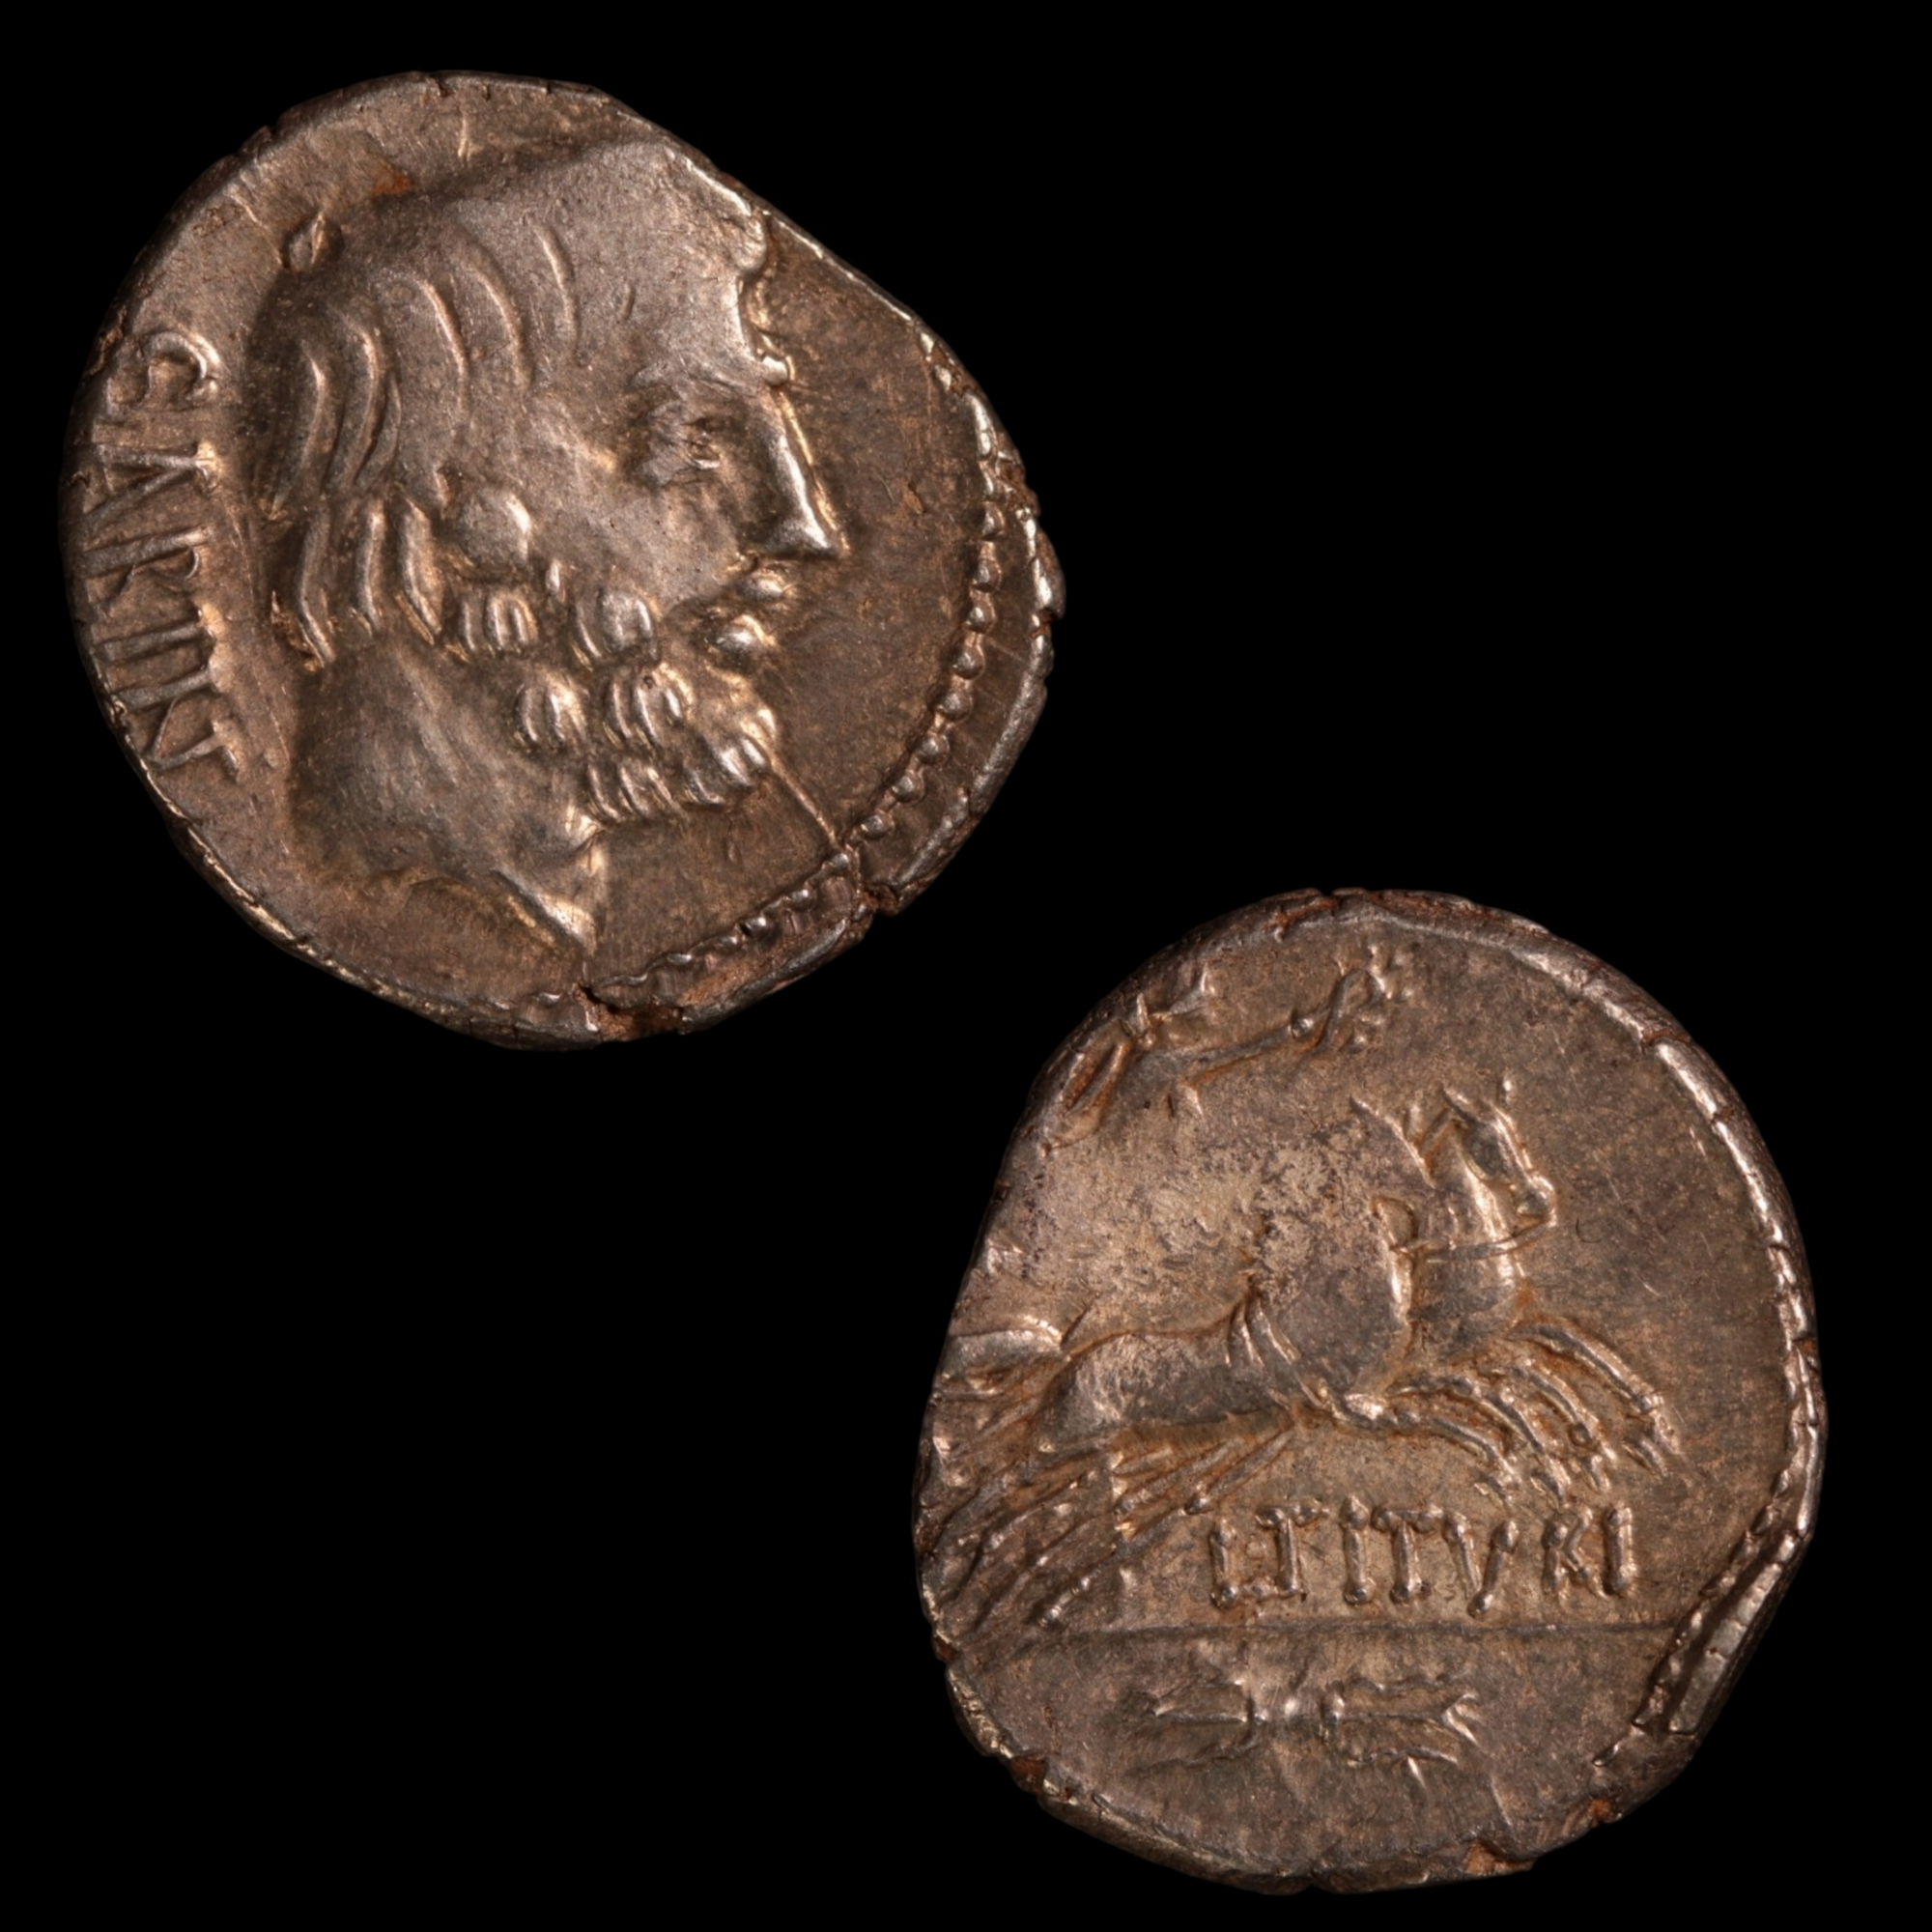 Denarius, Roman Republic, King Taitus & Victory - 89 BCE - Roman Republic - Auction 9/6/23